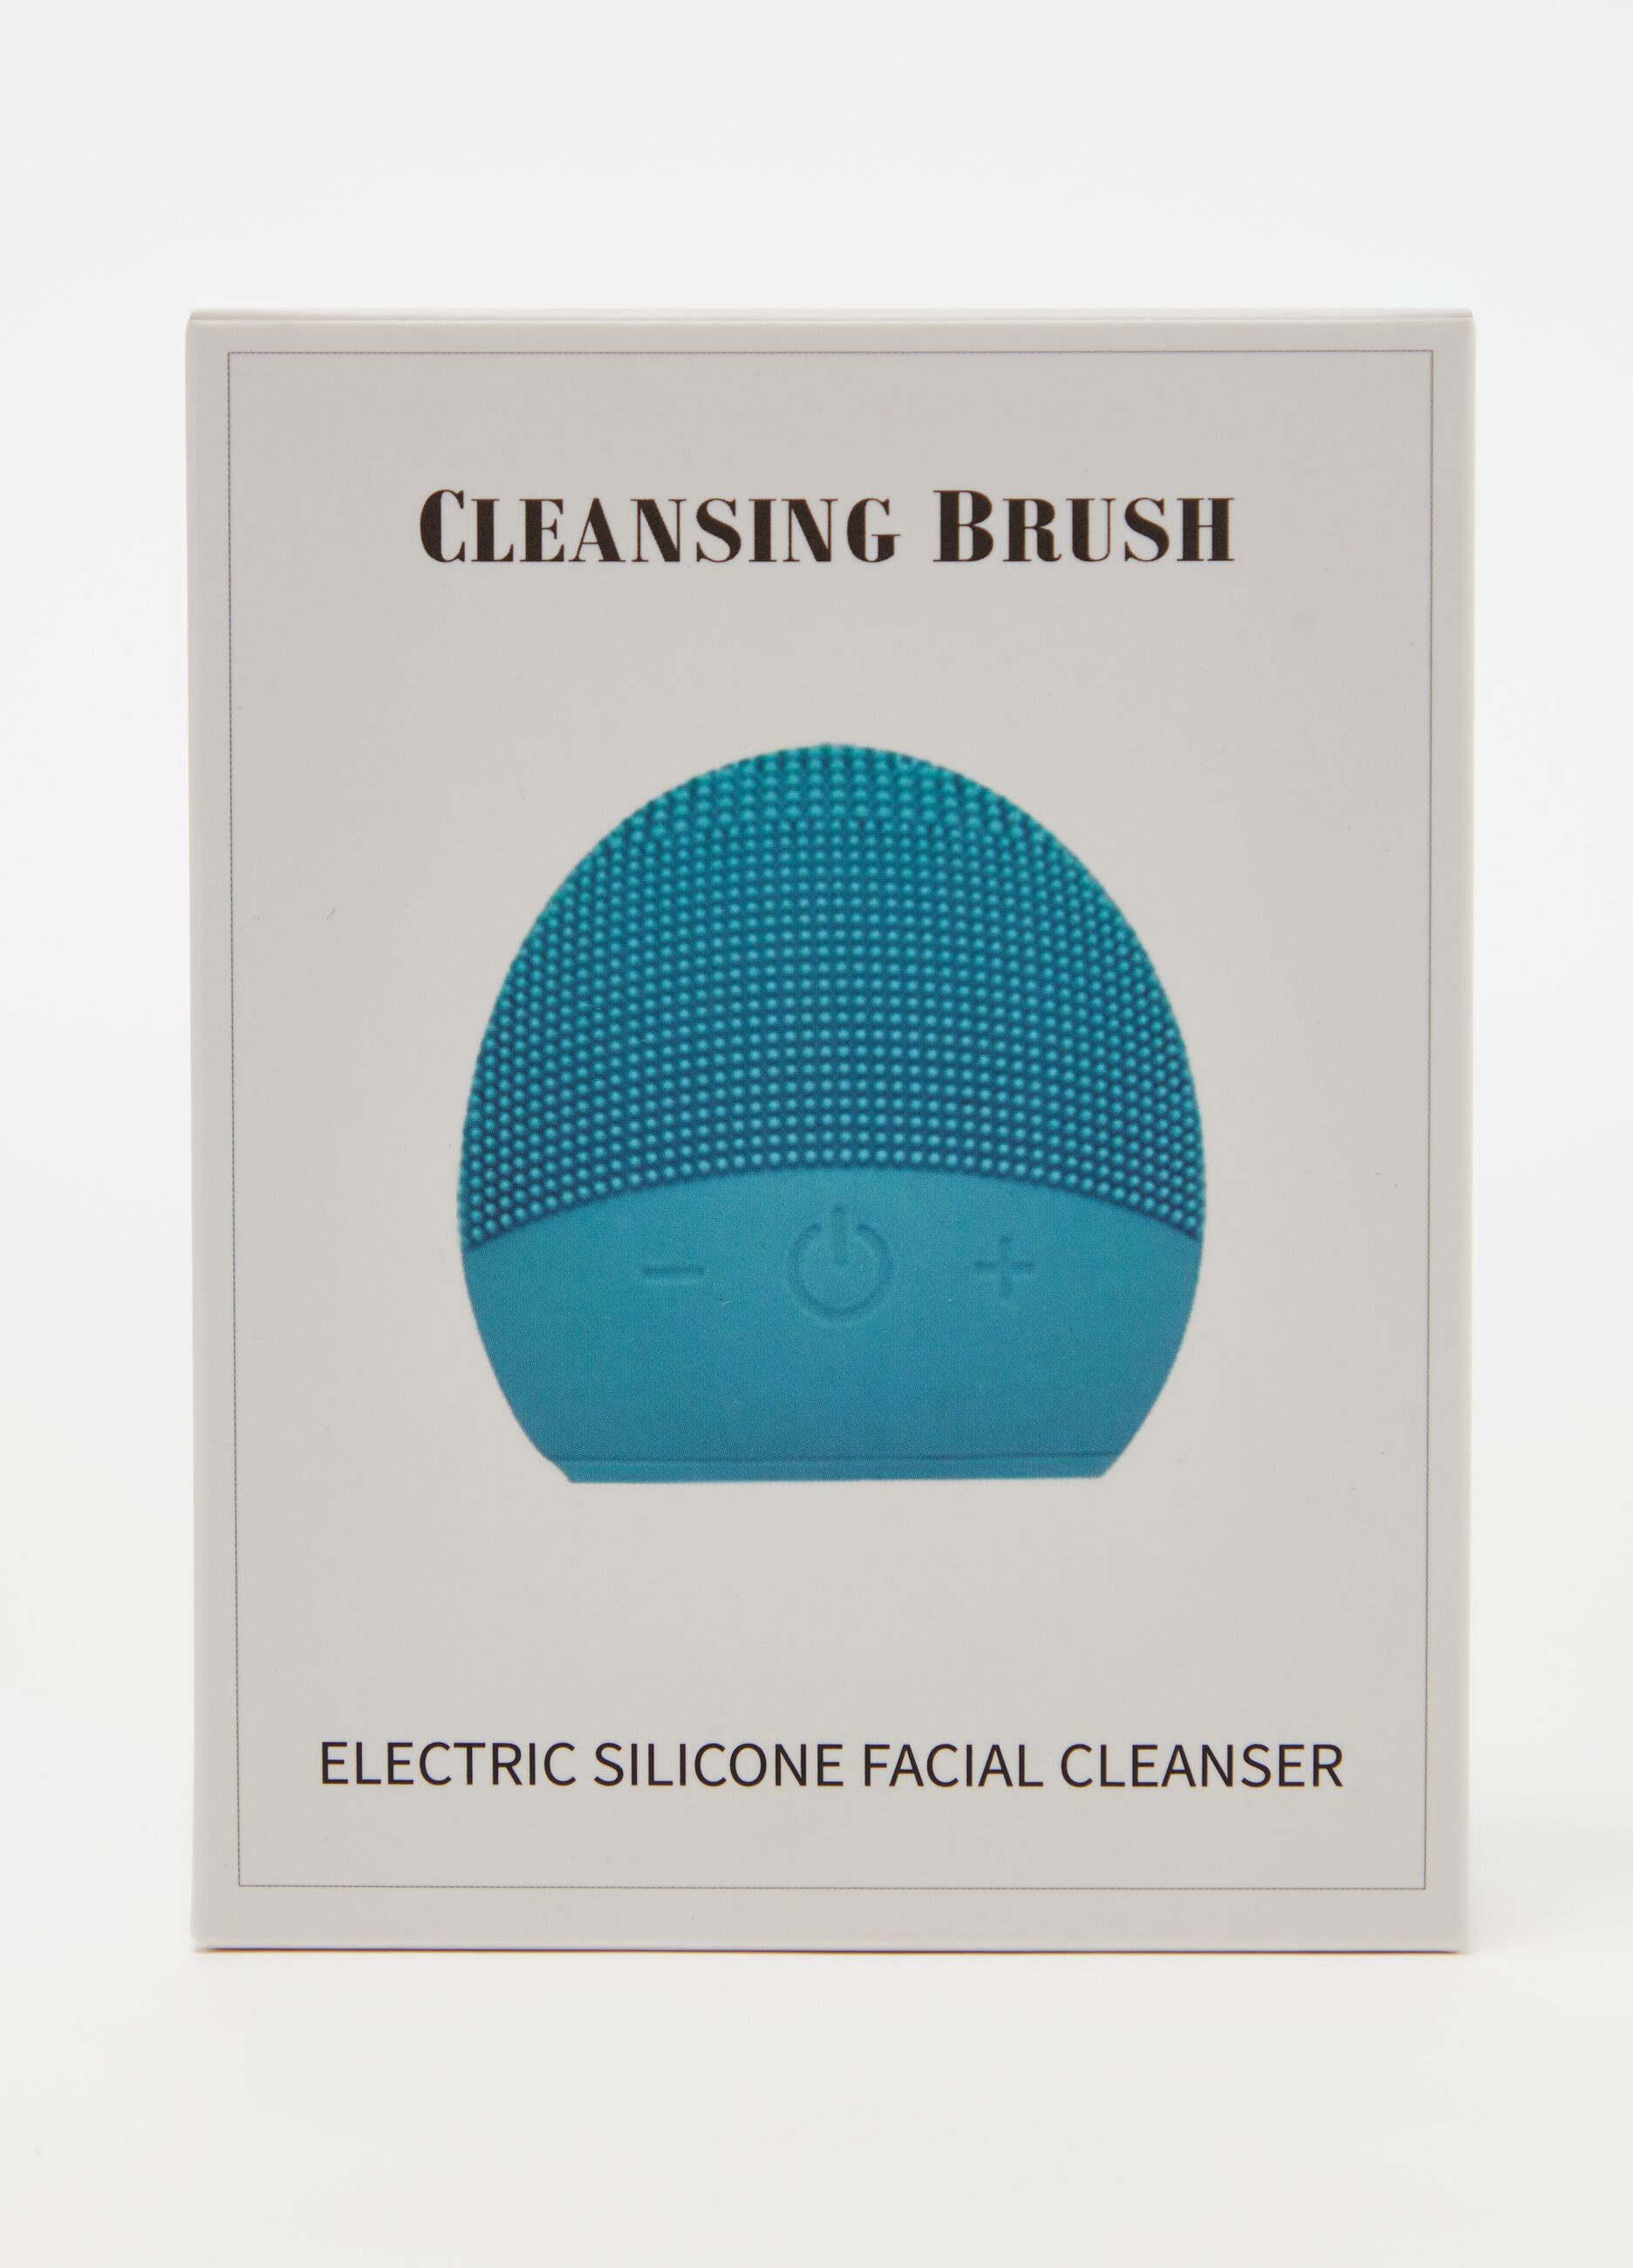 Facial cleansing brush